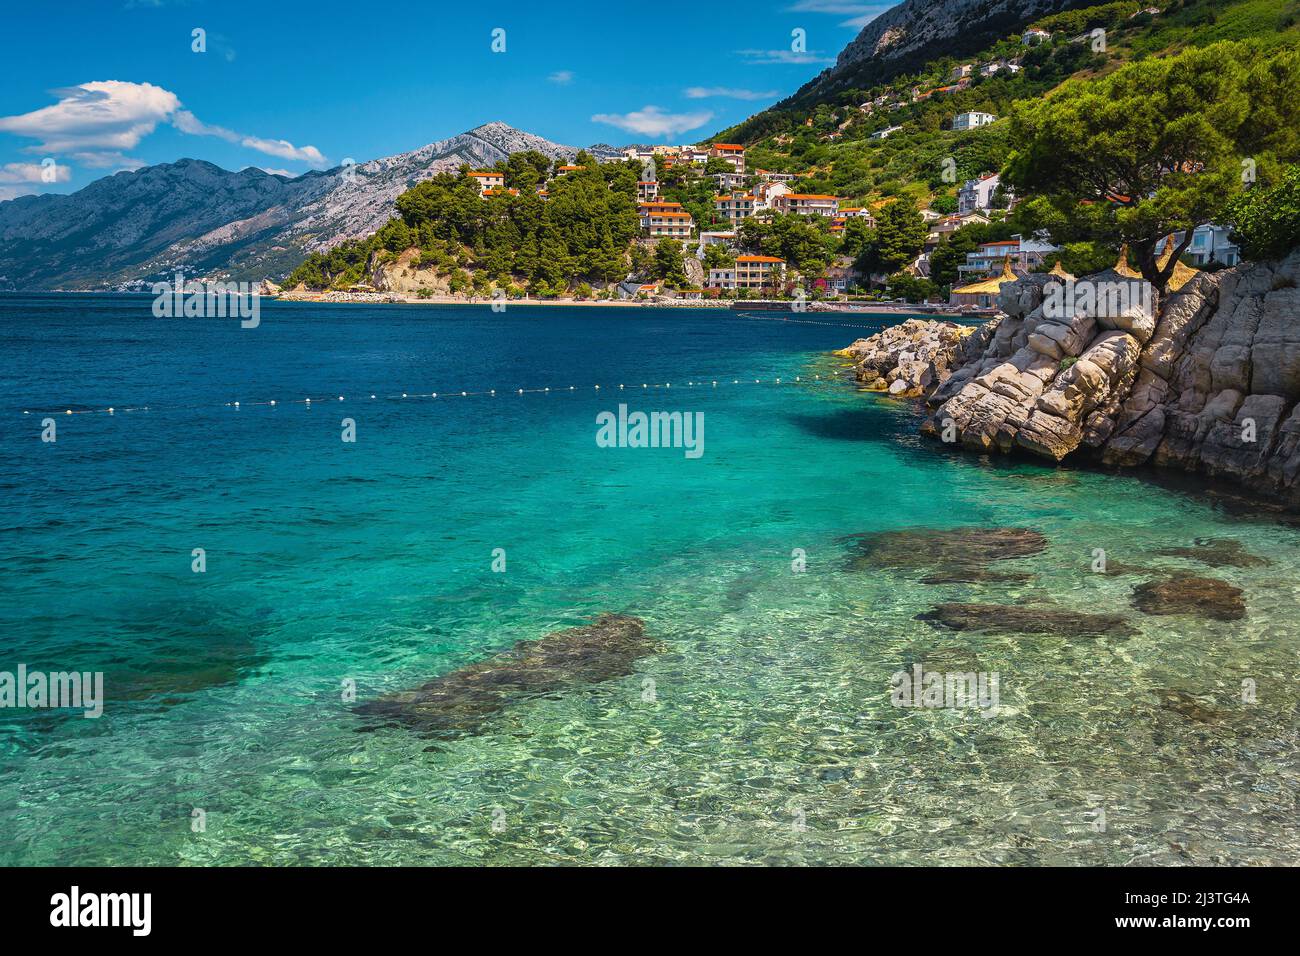 Beautiful gravelly seashore and fantastic places with mediterranean houses on the seaside, Brela, Dalmatia, Croatia, Europe Stock Photo